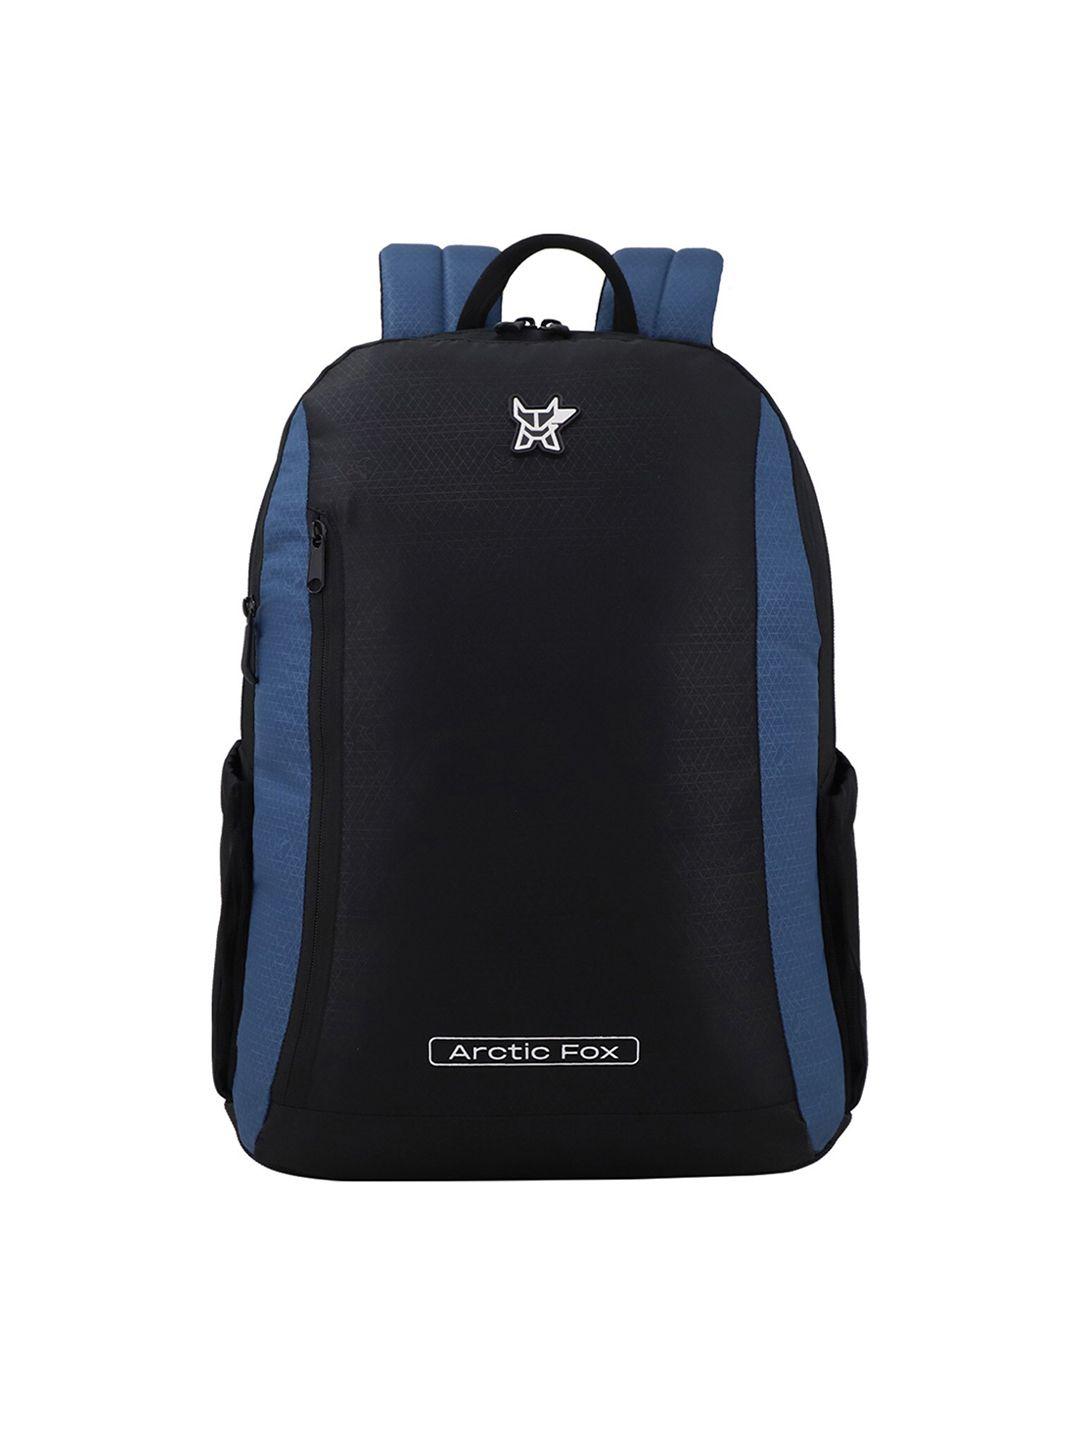 arctic fox unisex blue & black laptop bag